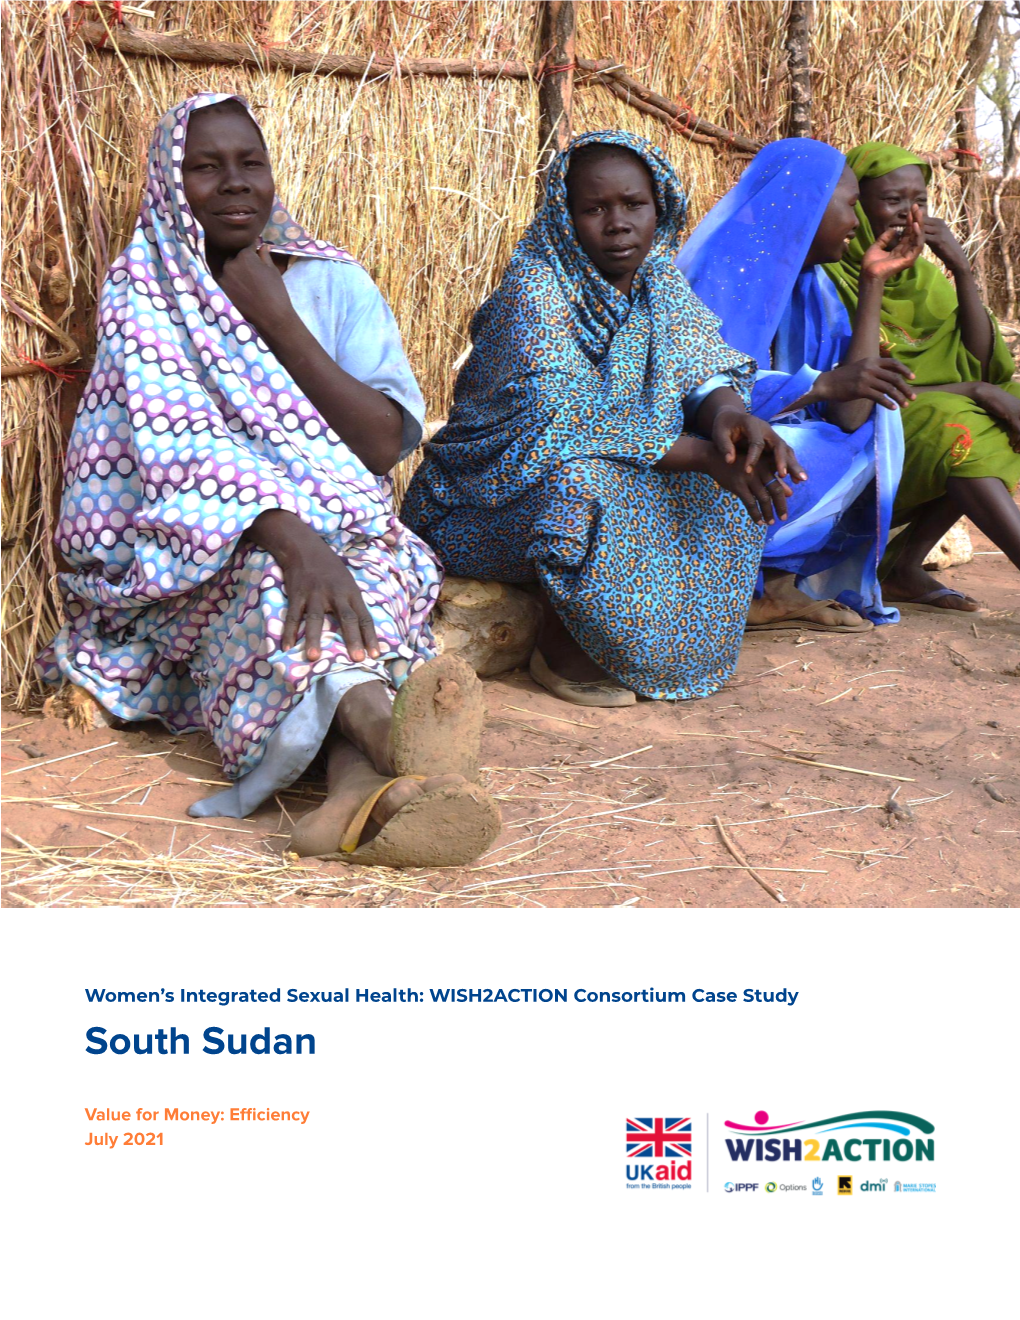 South Sudan Case Study